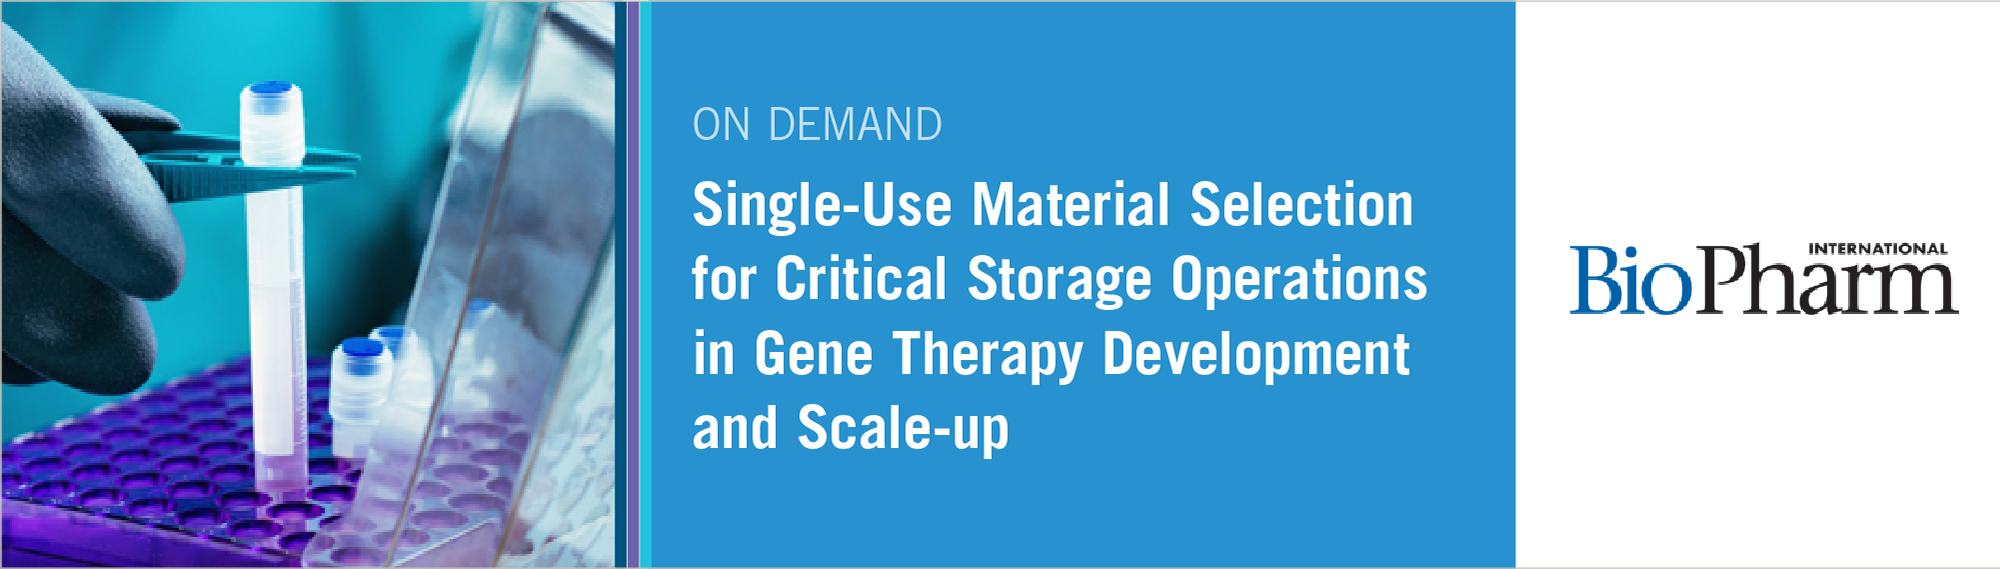 su-material-for-critical-storage-in-gene-therapy-webinar-hubspot-11744-desktop-1918x568